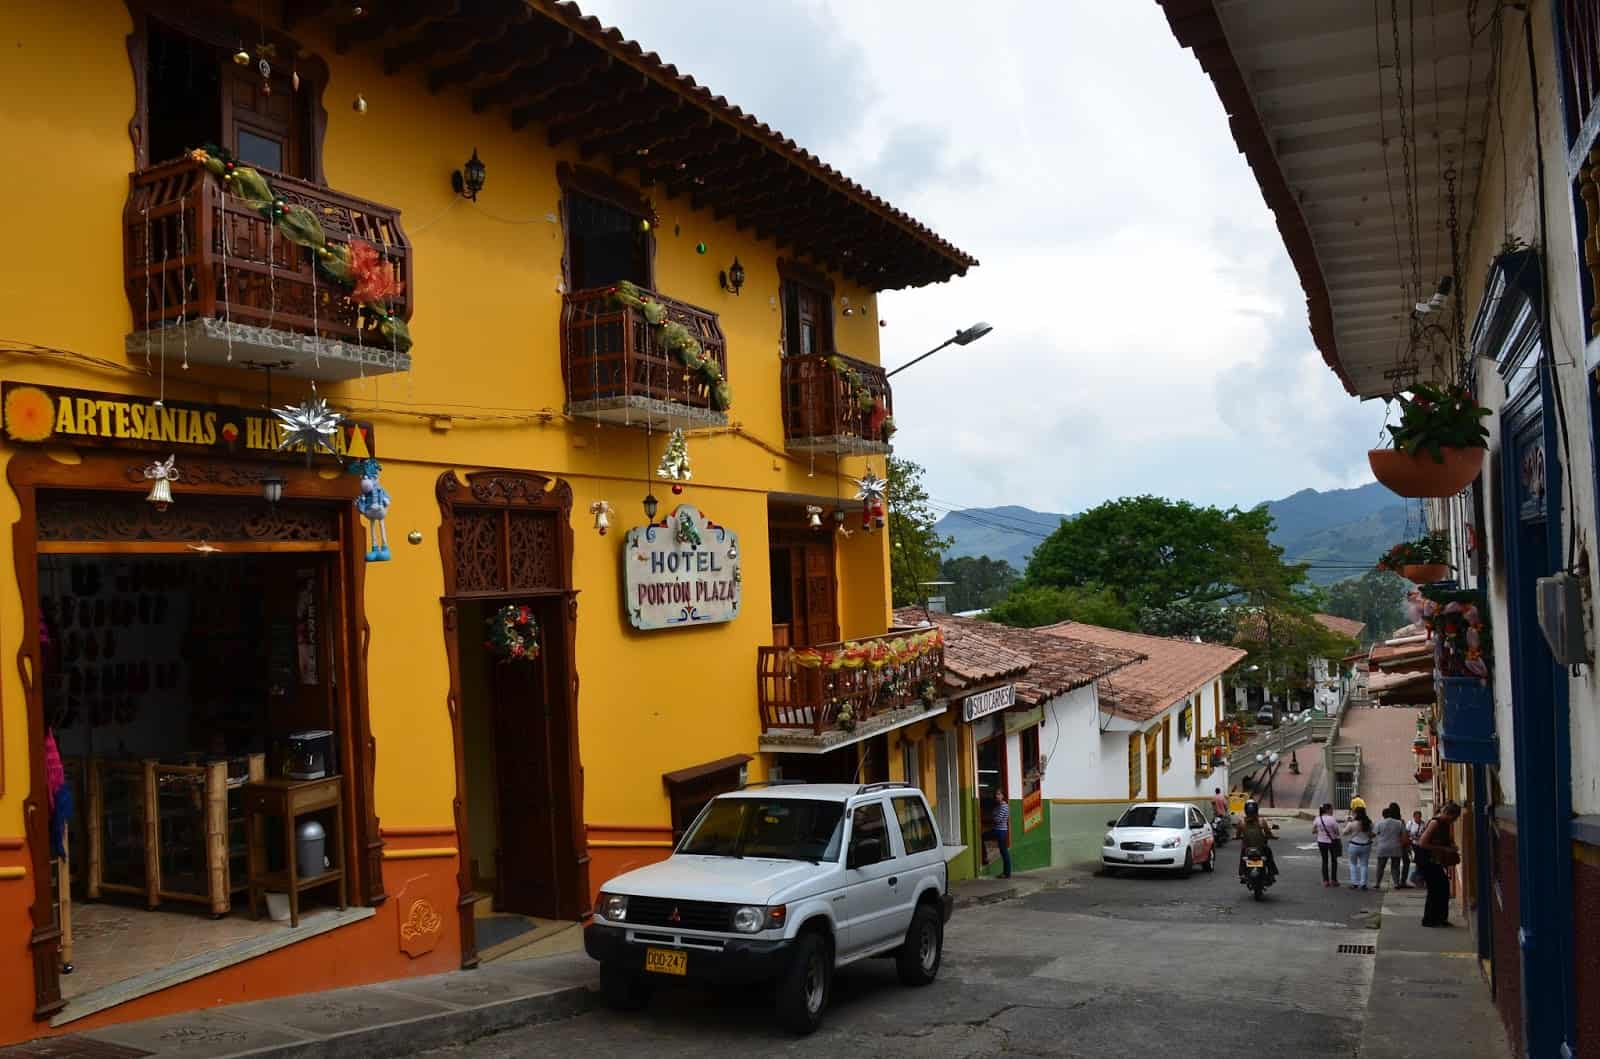 Hotel Portón Plaza in Jericó Antioquia Colombia